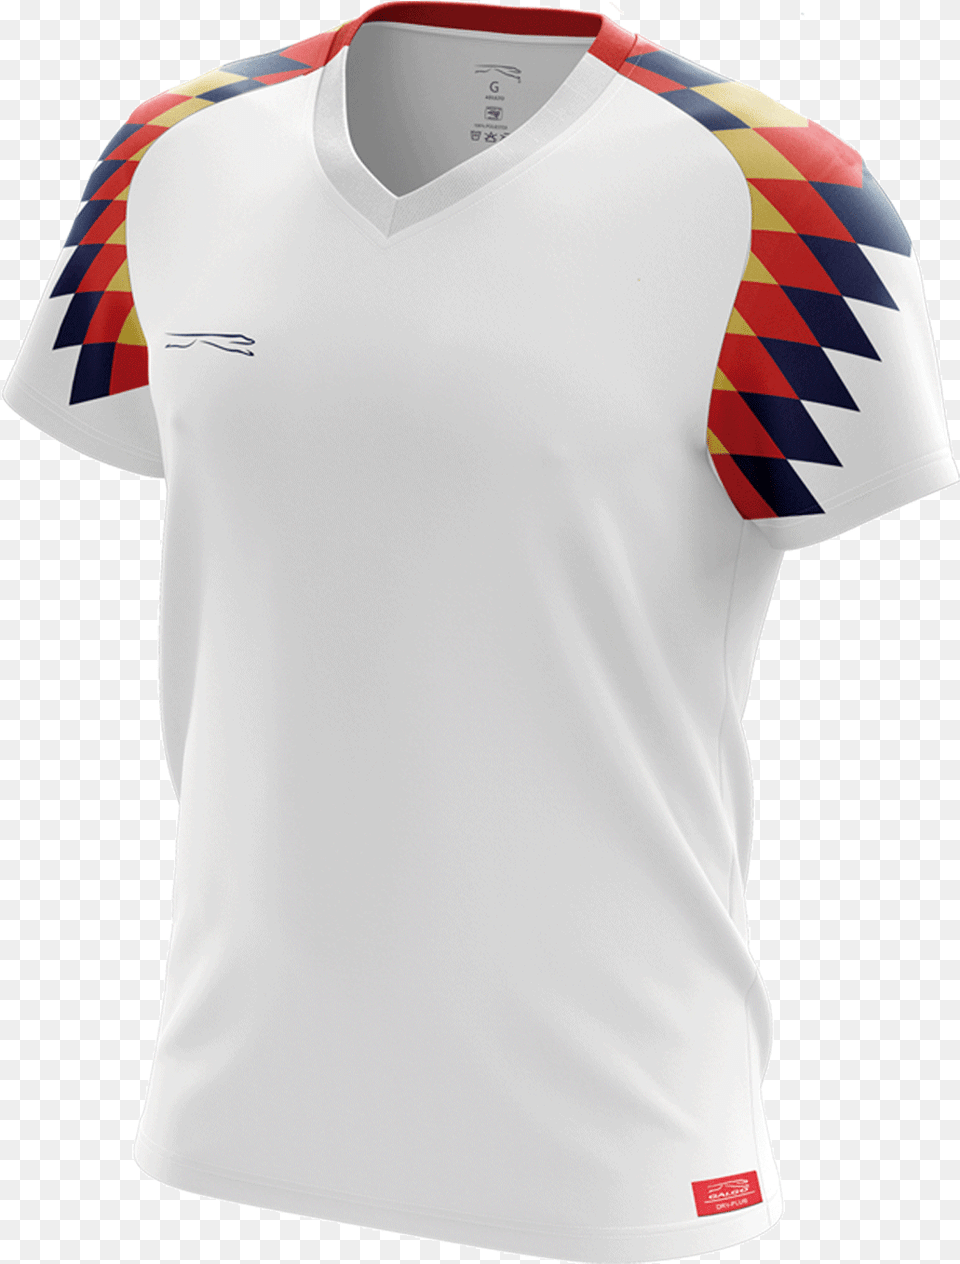 Playera Del America, Clothing, Shirt, T-shirt, Jersey Png